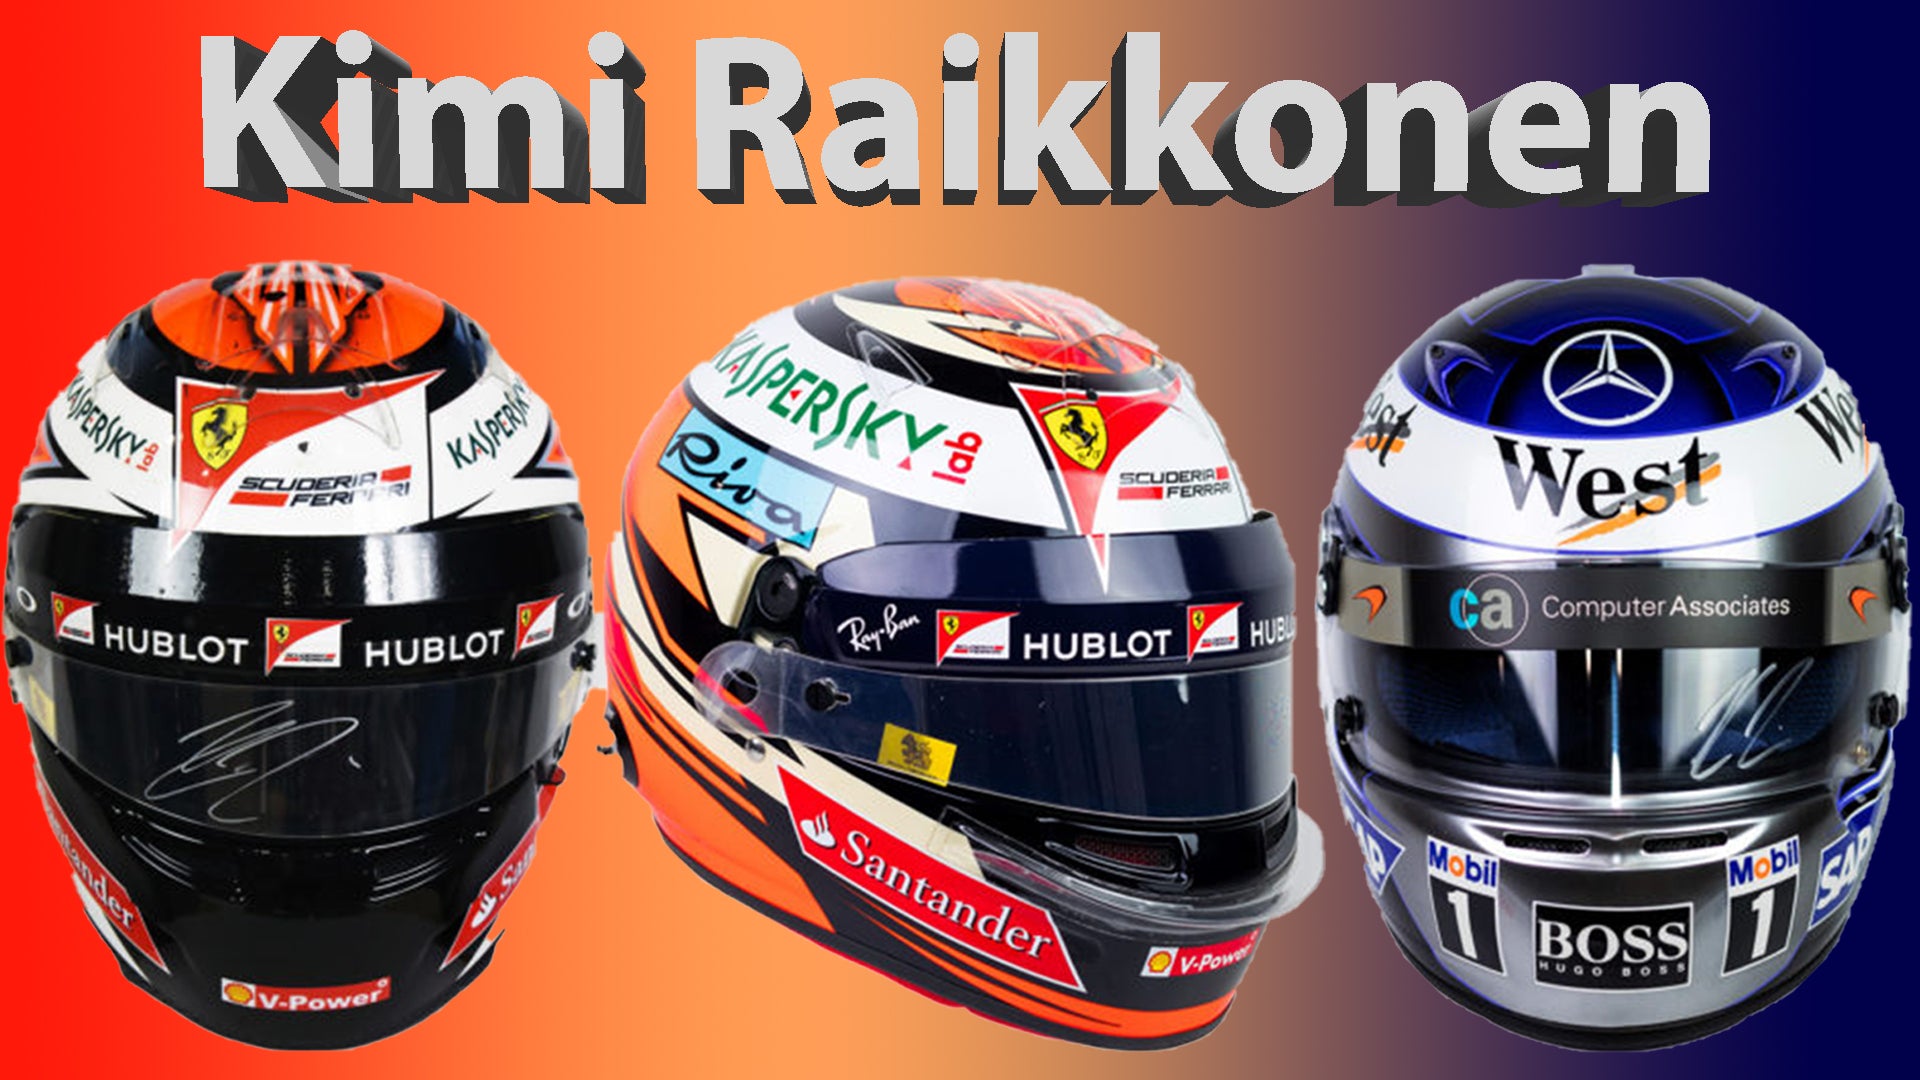 Kimi Räikkönen race worn and limited edition replicas now available